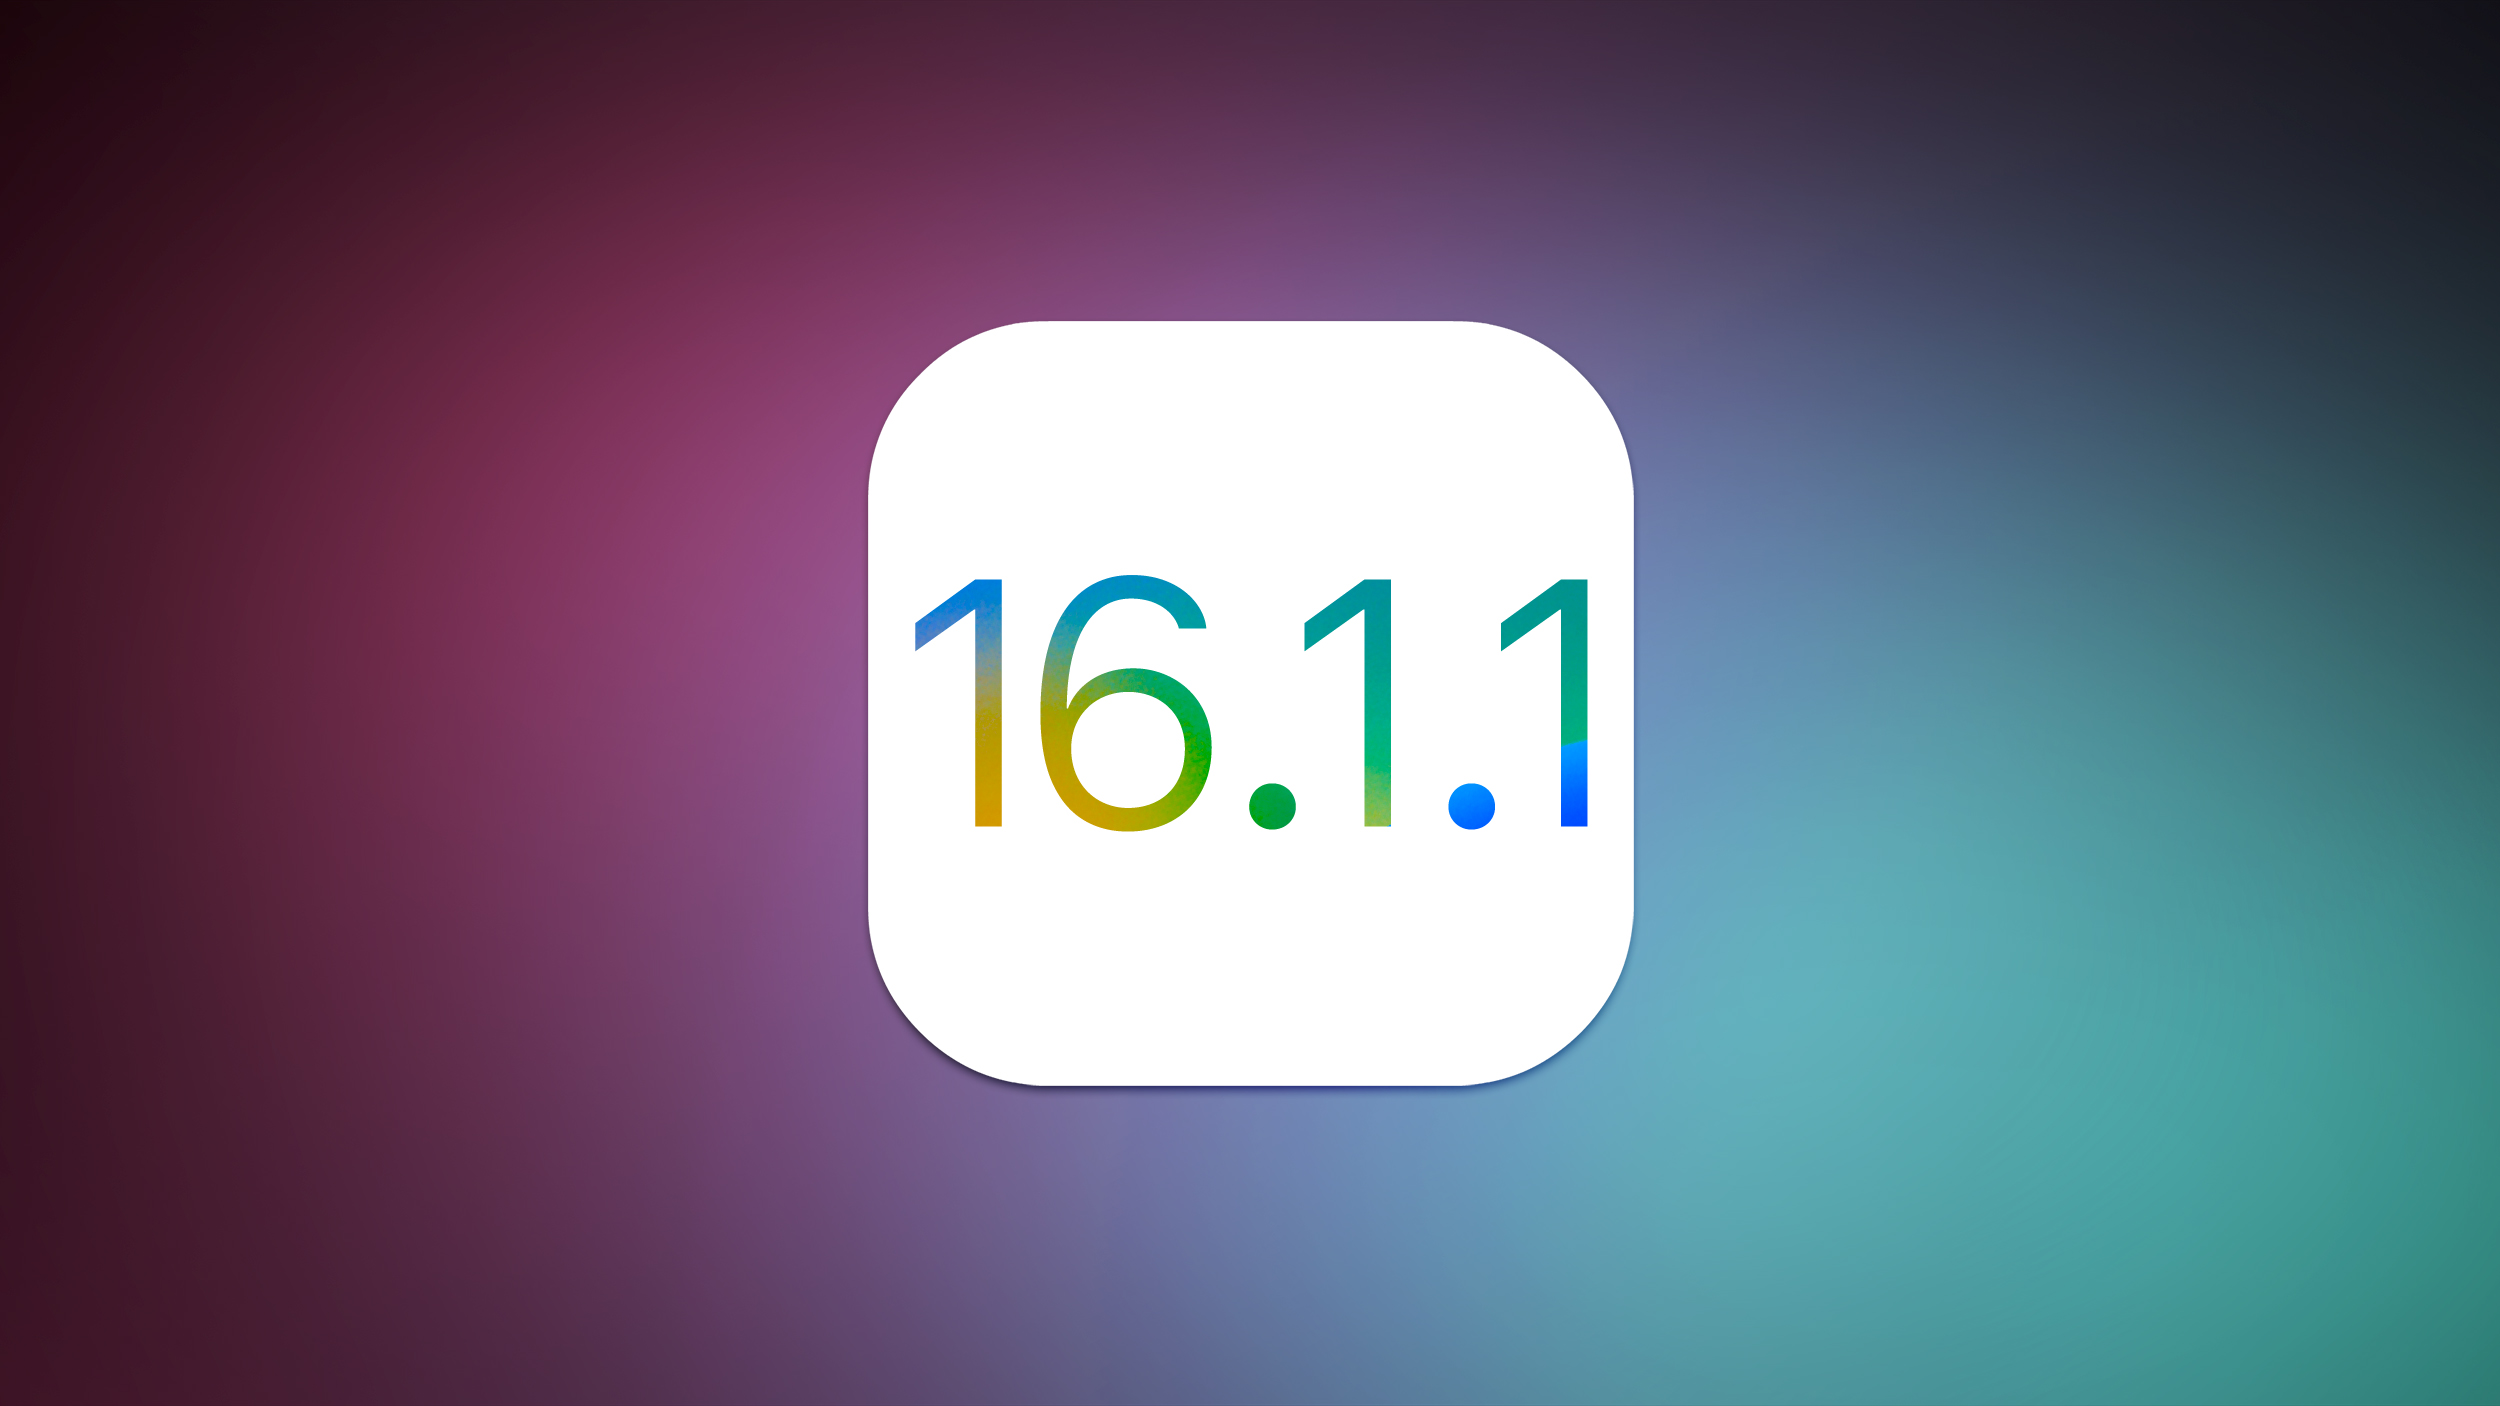 Apple Preparing iOS 16.1.1 as Widespread Wi-Fi Bug Persists